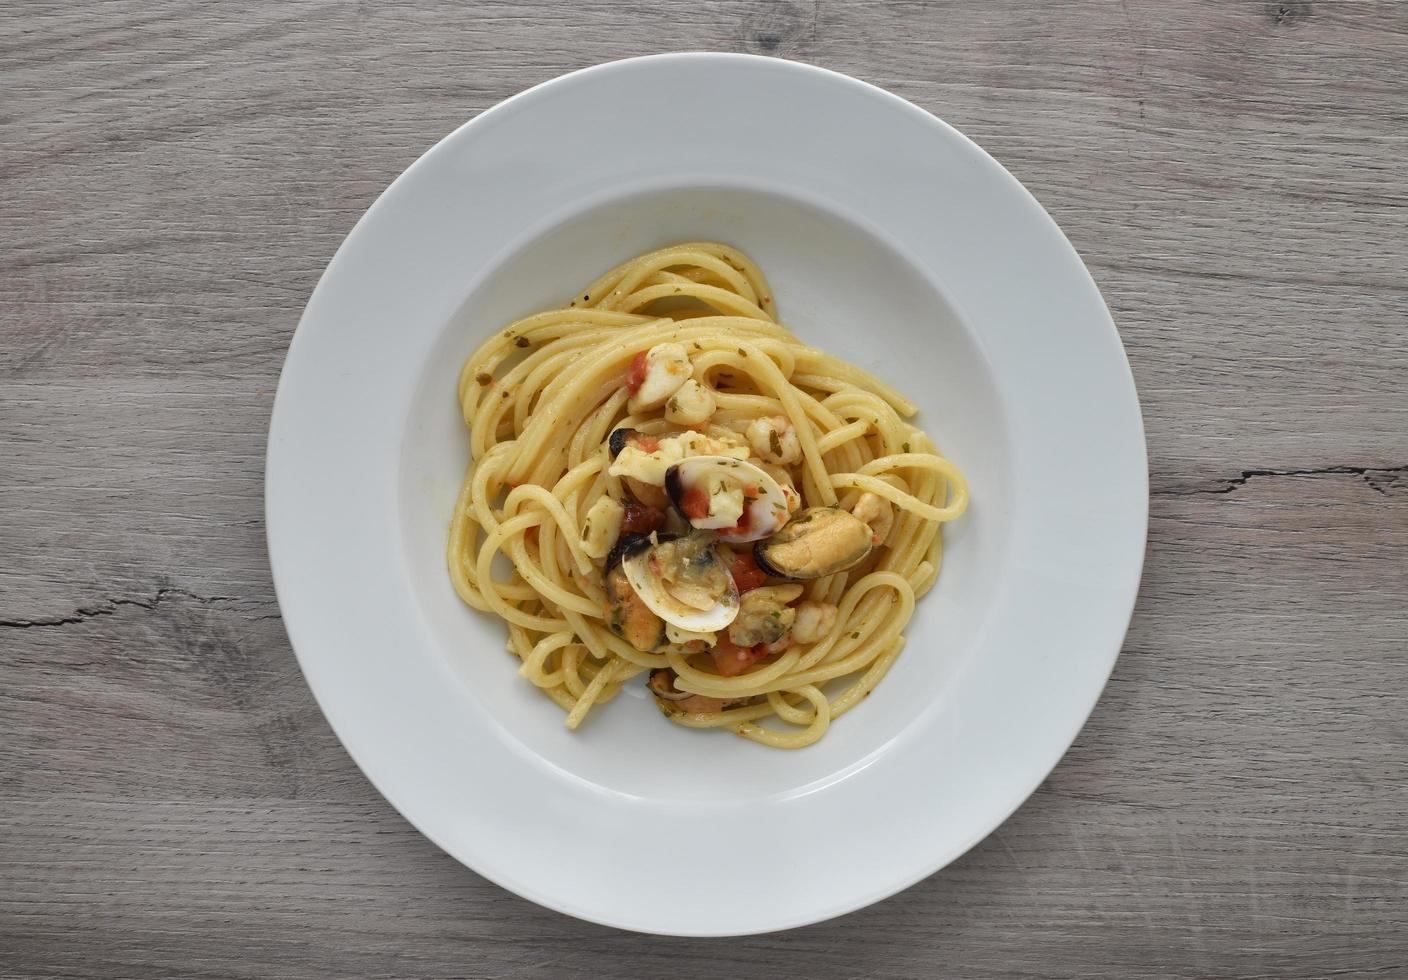 Spaghetti allo scoglio, spaghetti with seafood. Italian pasta with mussels, shrimps and clams. photo